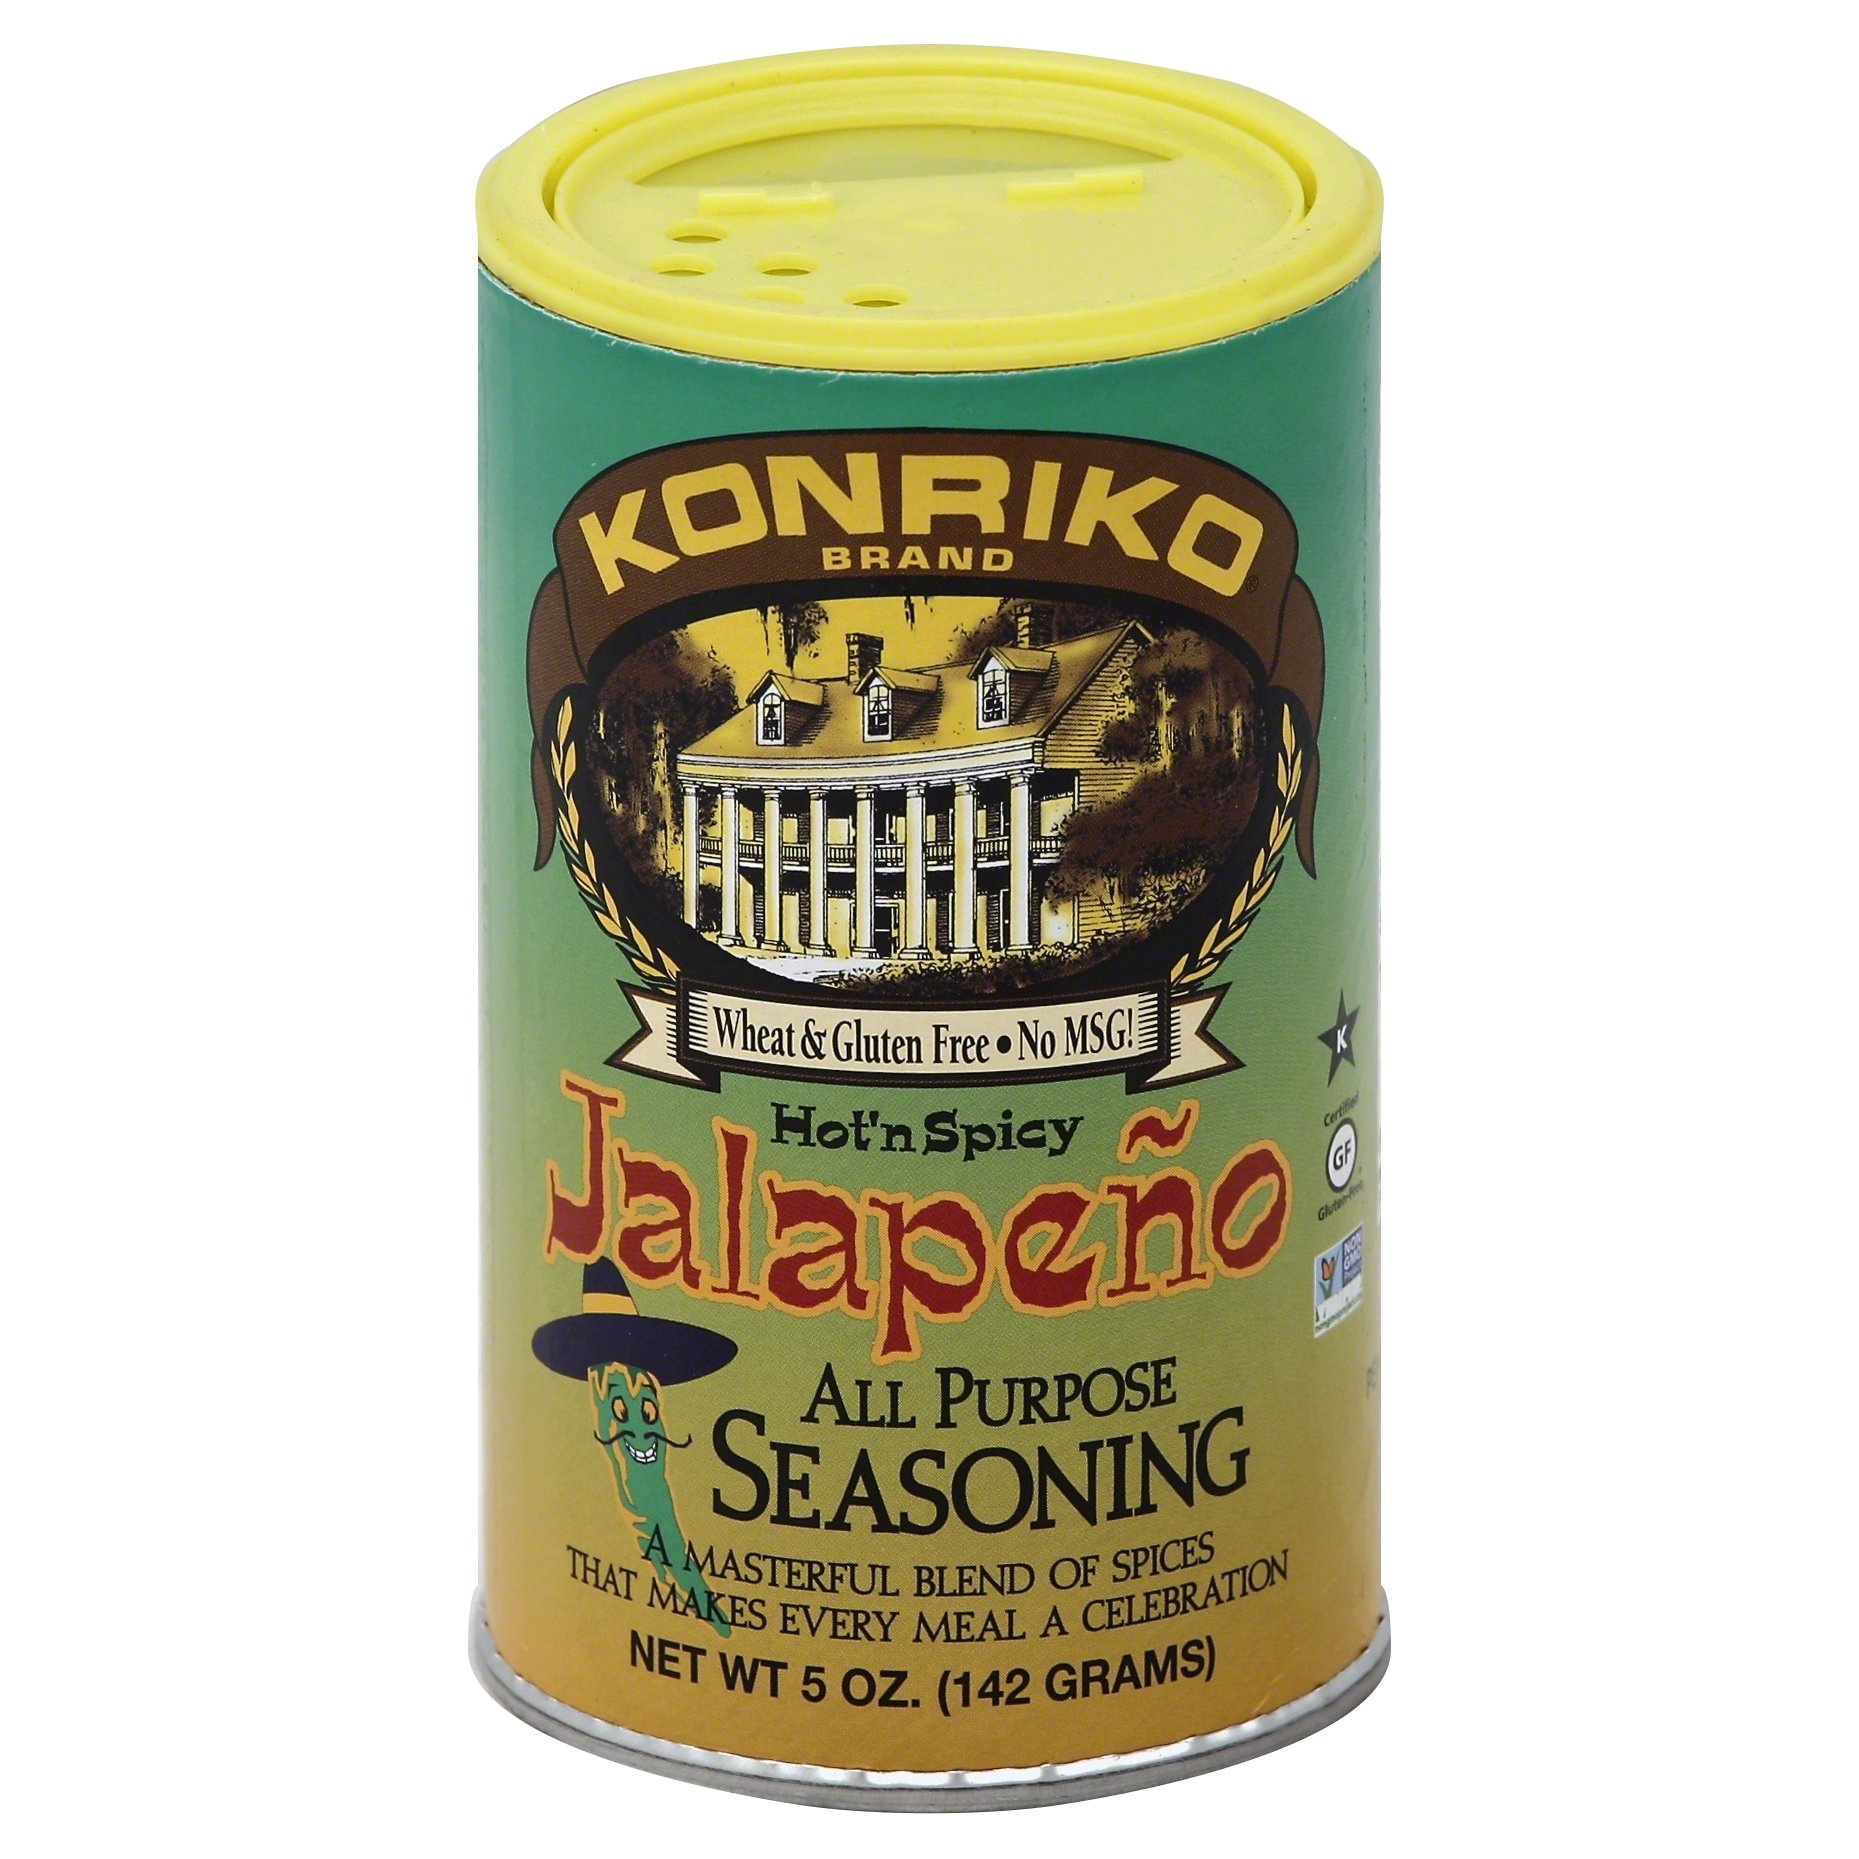 slide 1 of 1, Konriko Brand Wheat & Gluten Free All Purpose Seasoning Hot 'n Spicy Jalapeno, 5 oz